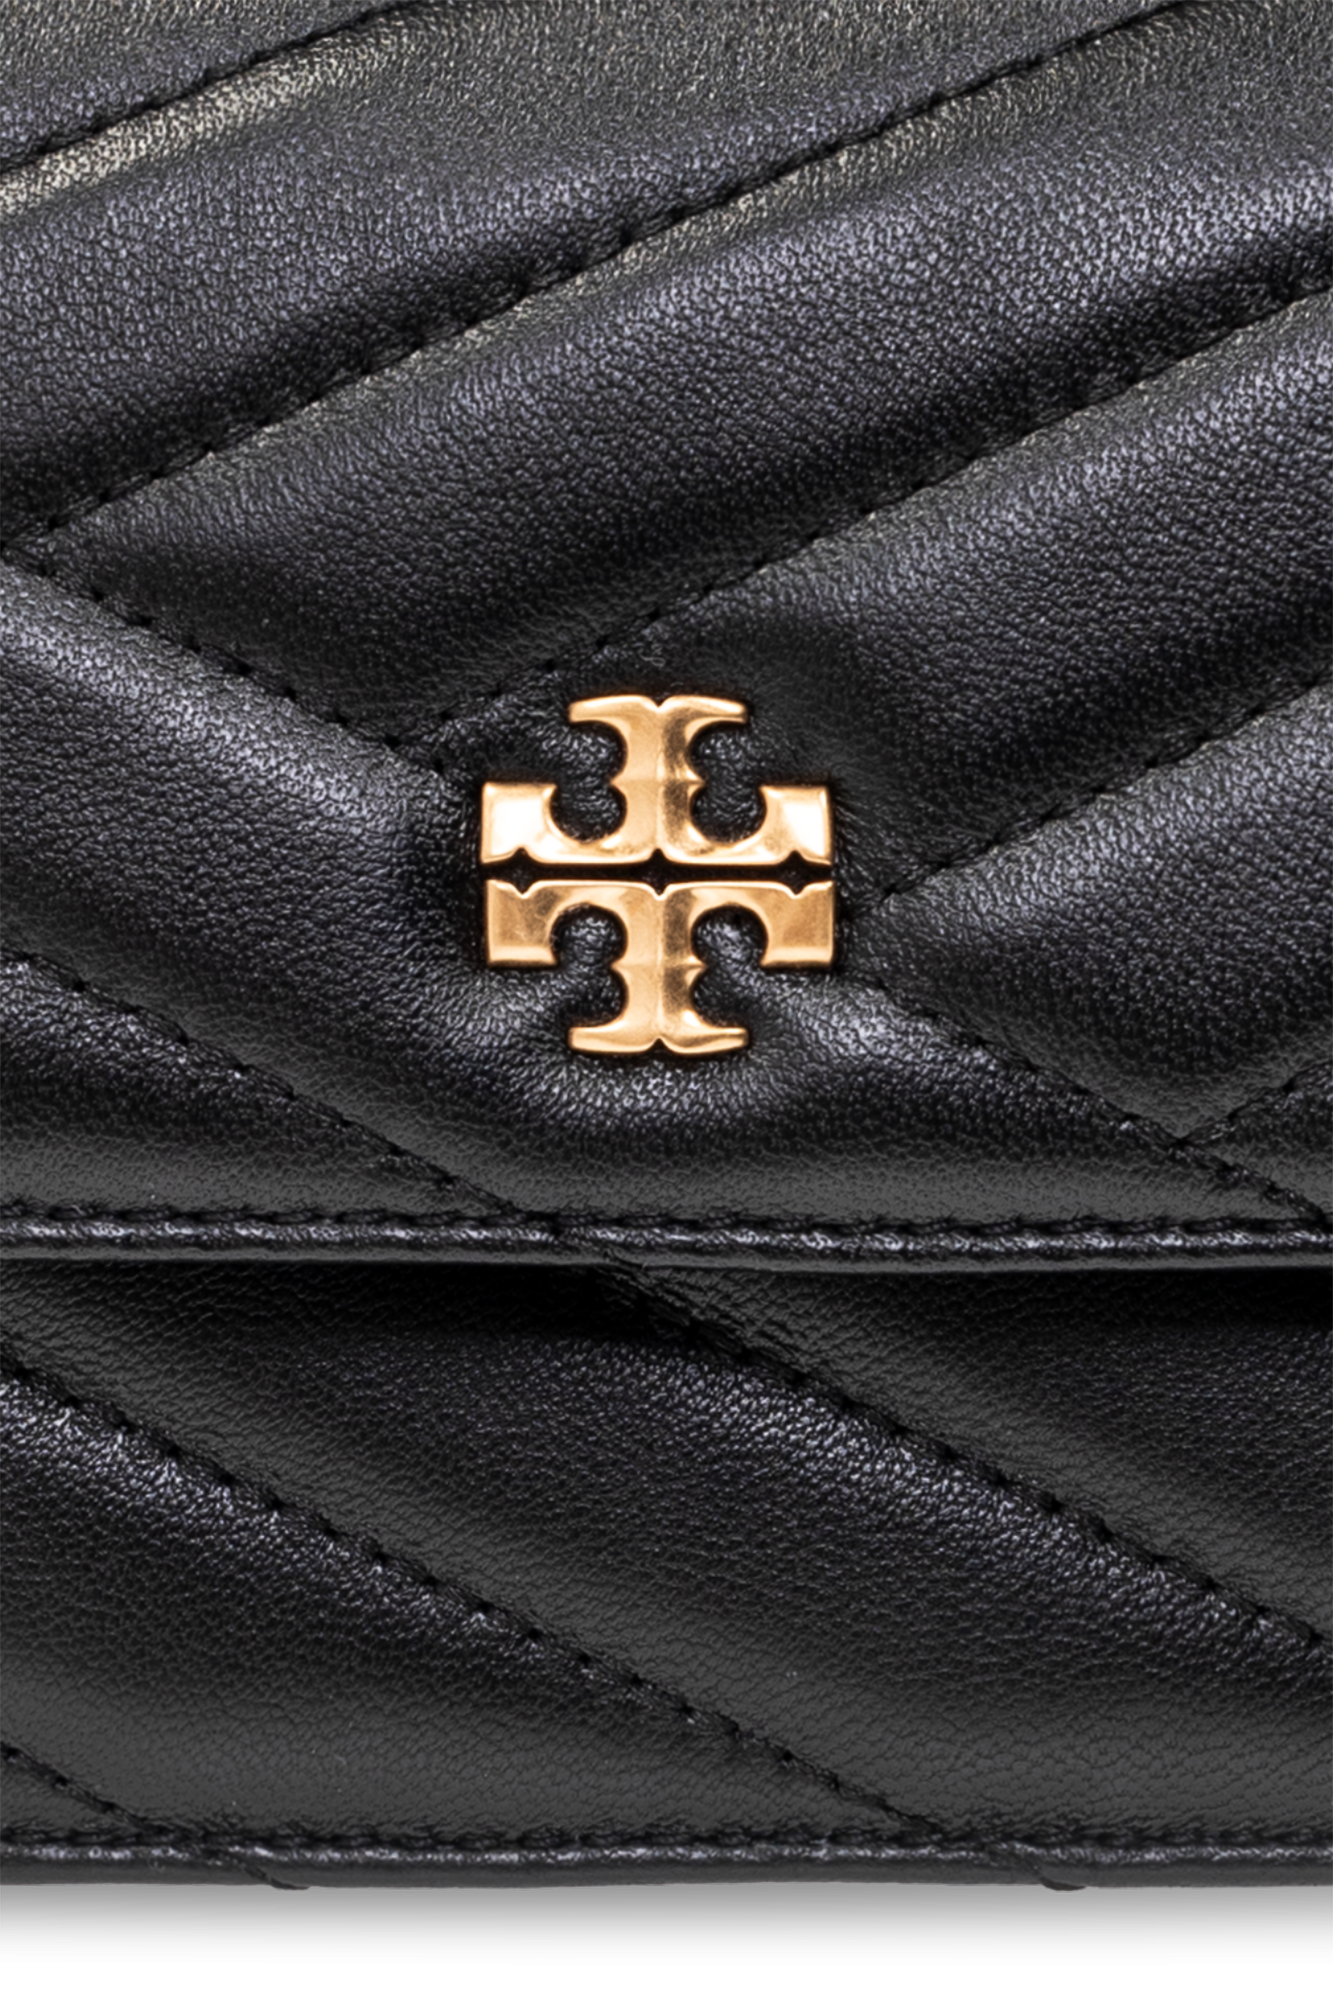 Kira Chevron Metallic Chain Wallet: Women's Designer Mini Bags